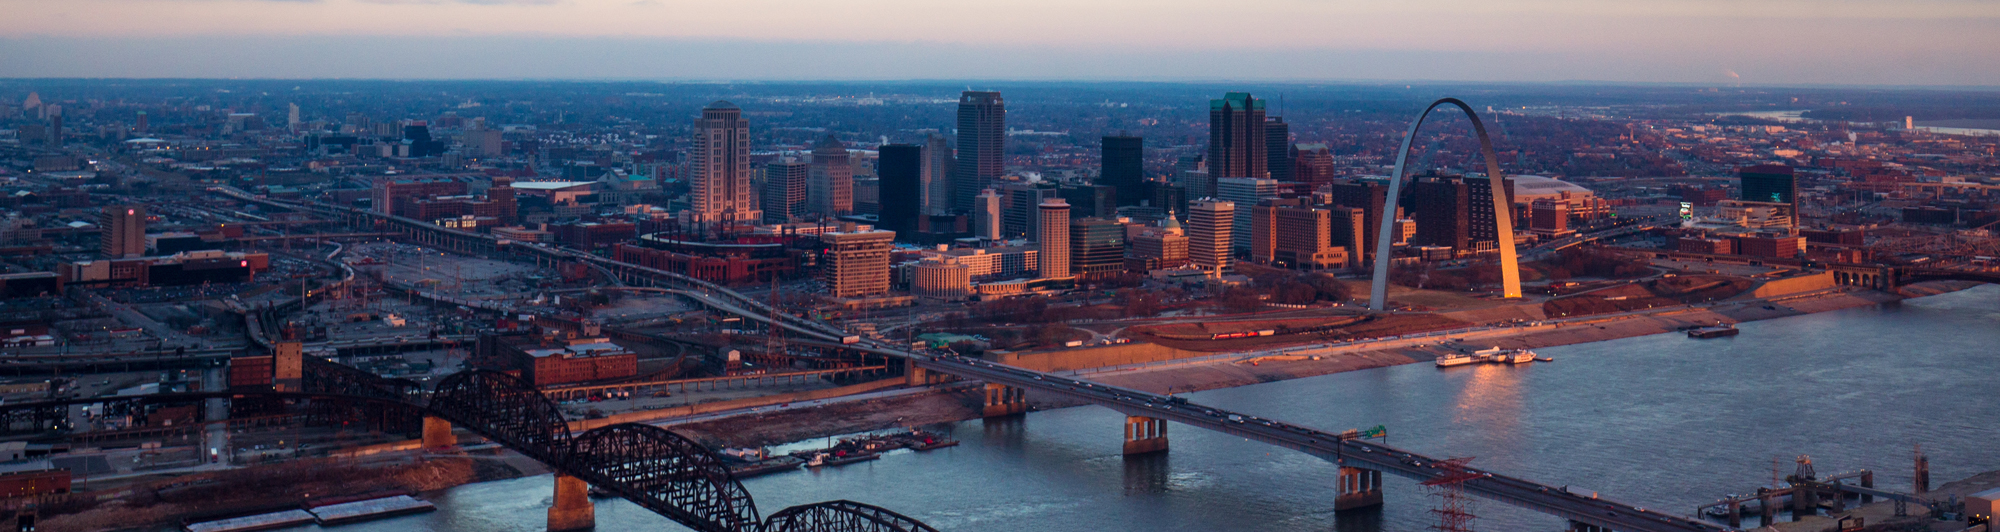 birds eye view of downtown St. Louis, Missouri